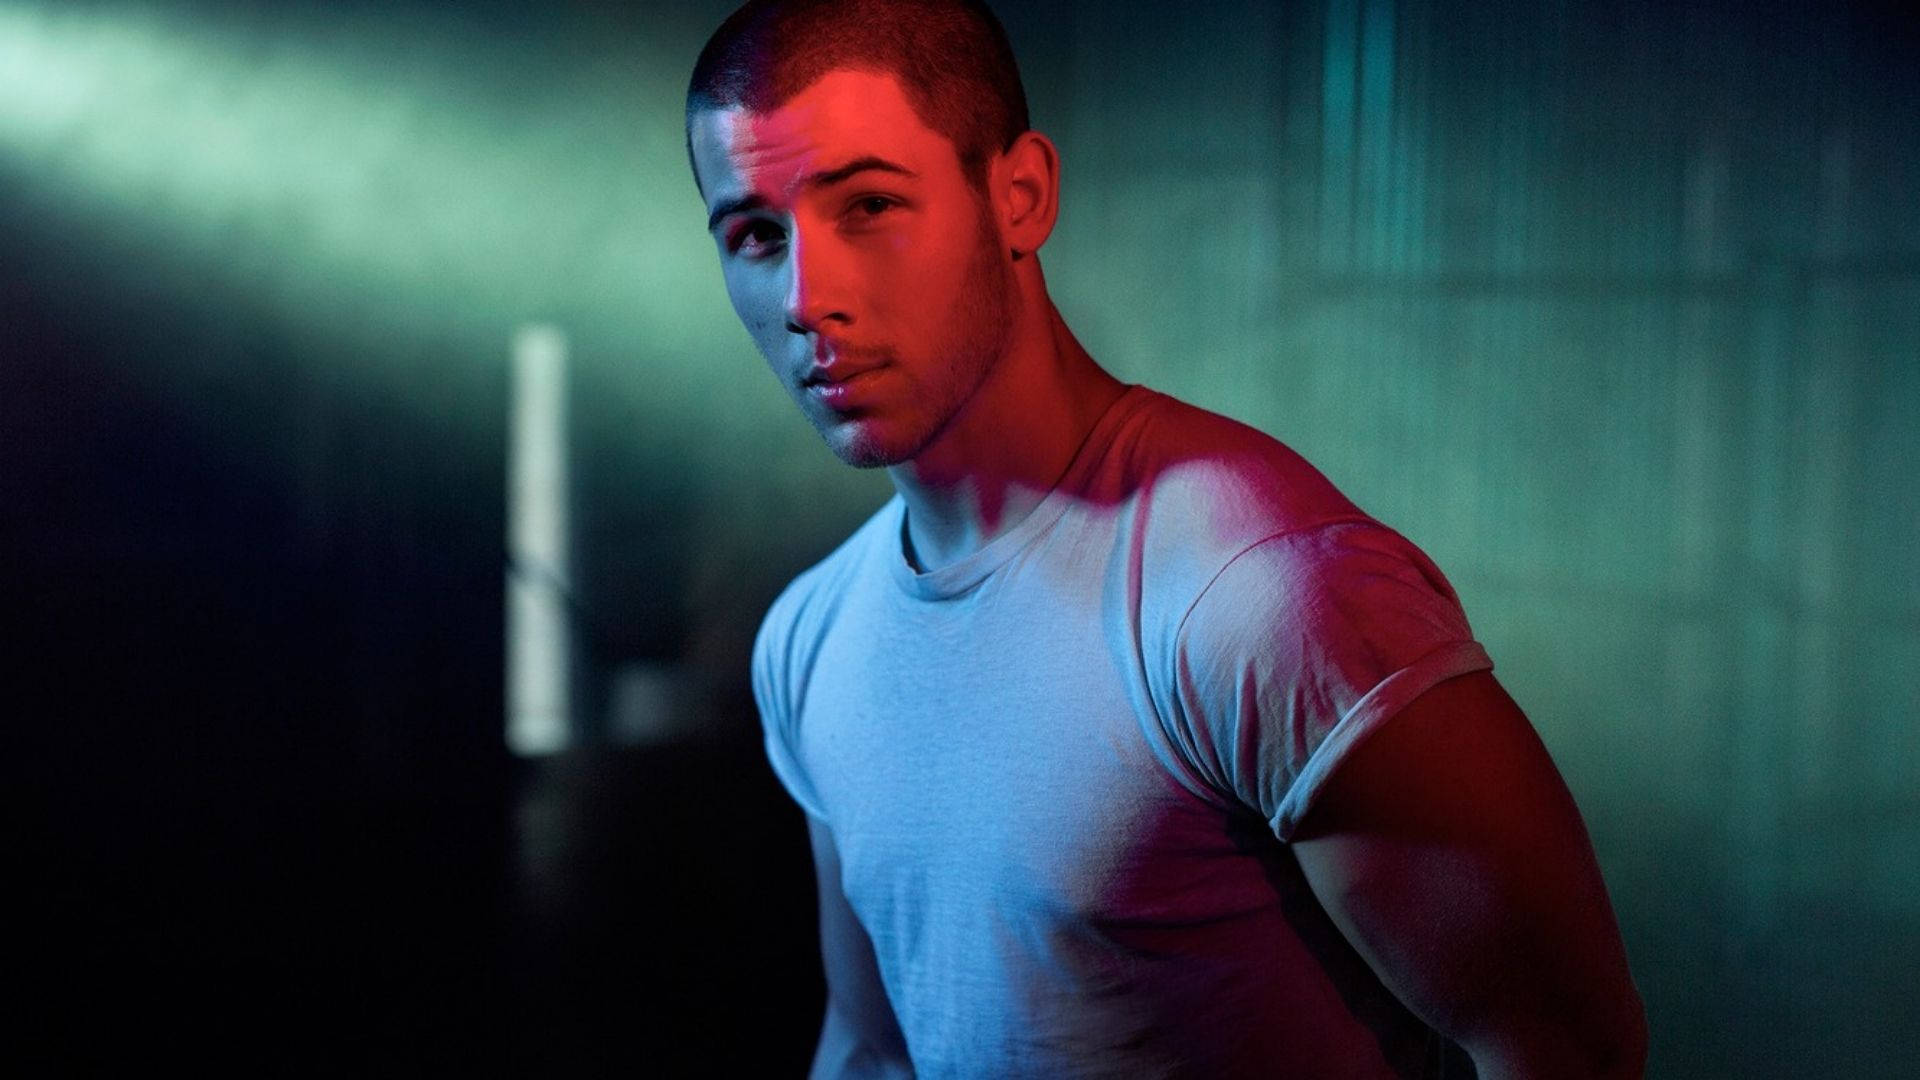 Nick Jonas Light Striking His Face Wallpaper